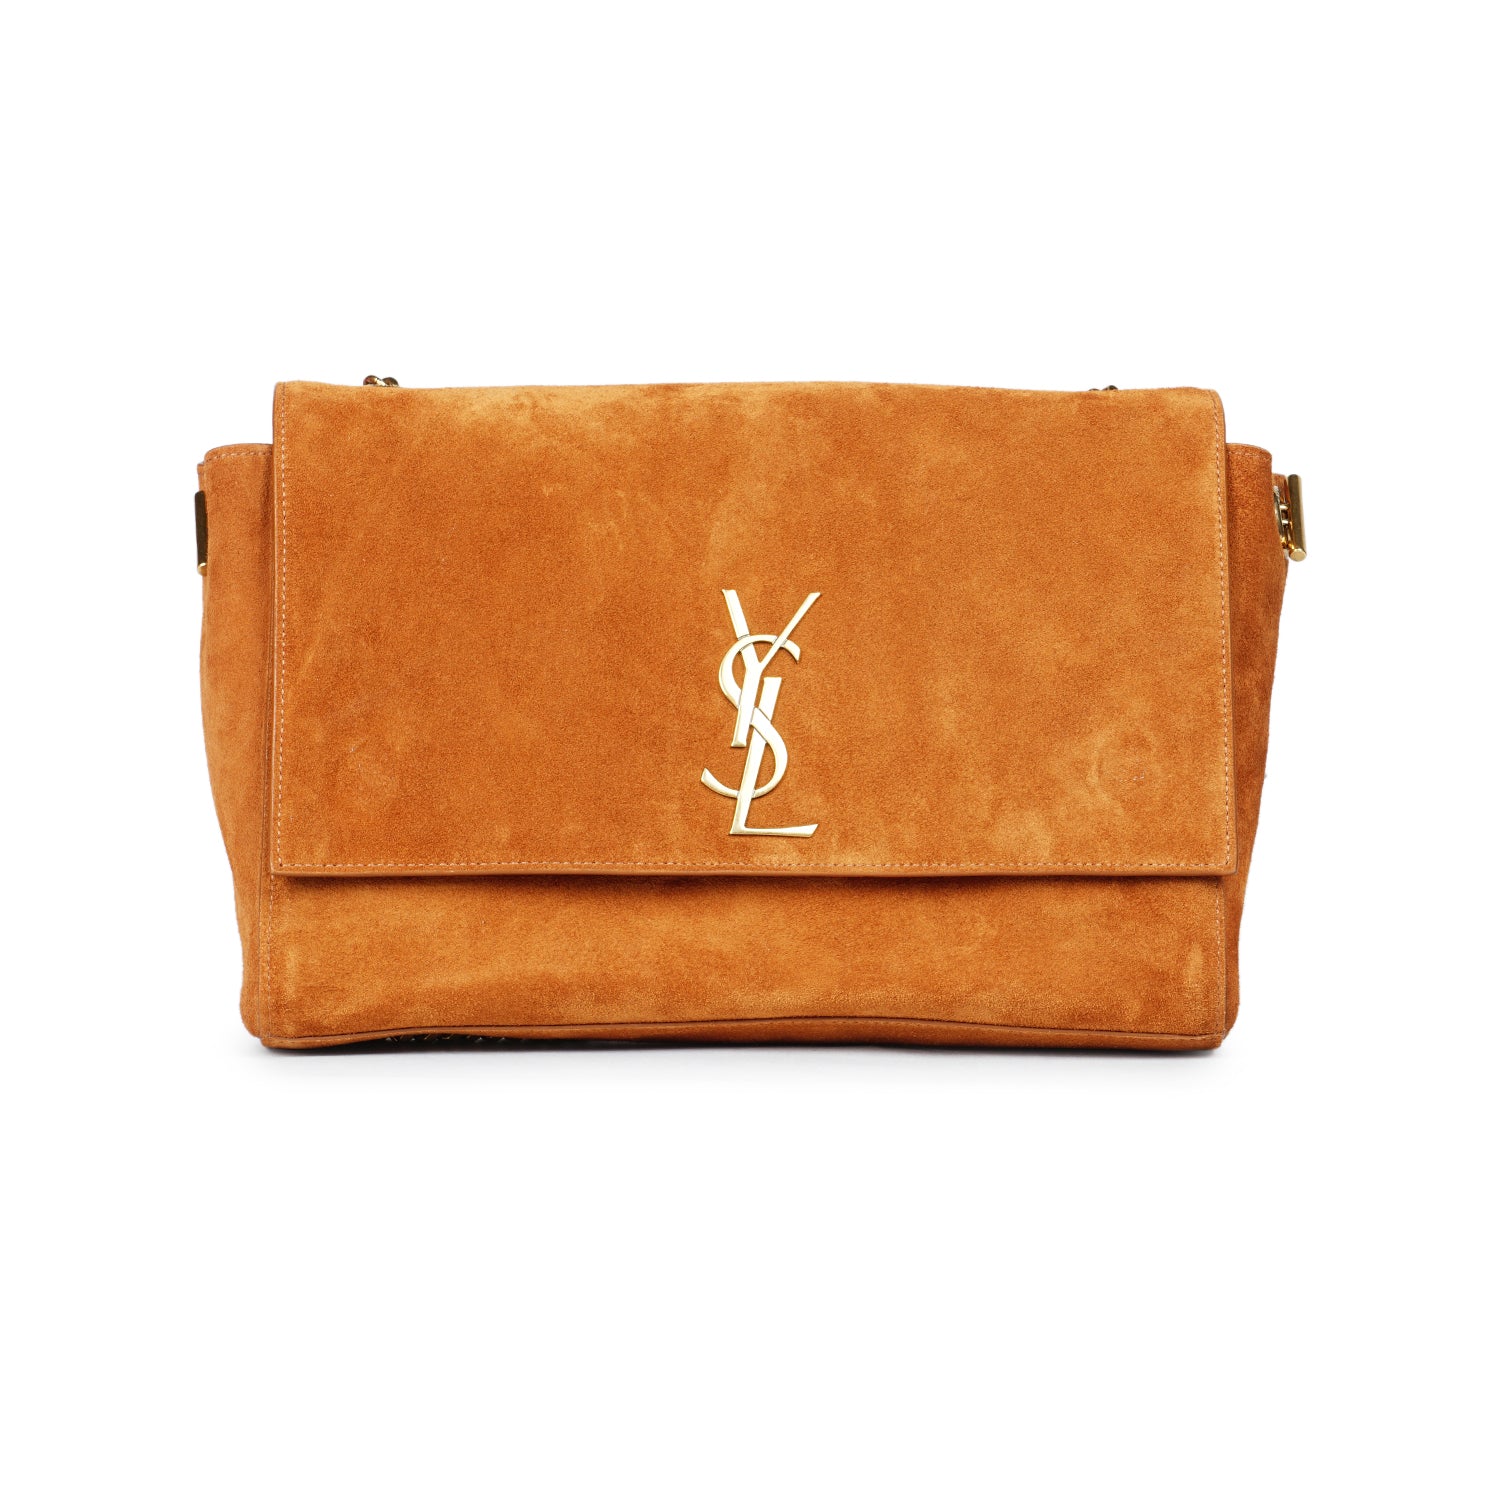 At Auction: Saint Laurent Limited Edition Kate Medium Chain Bag